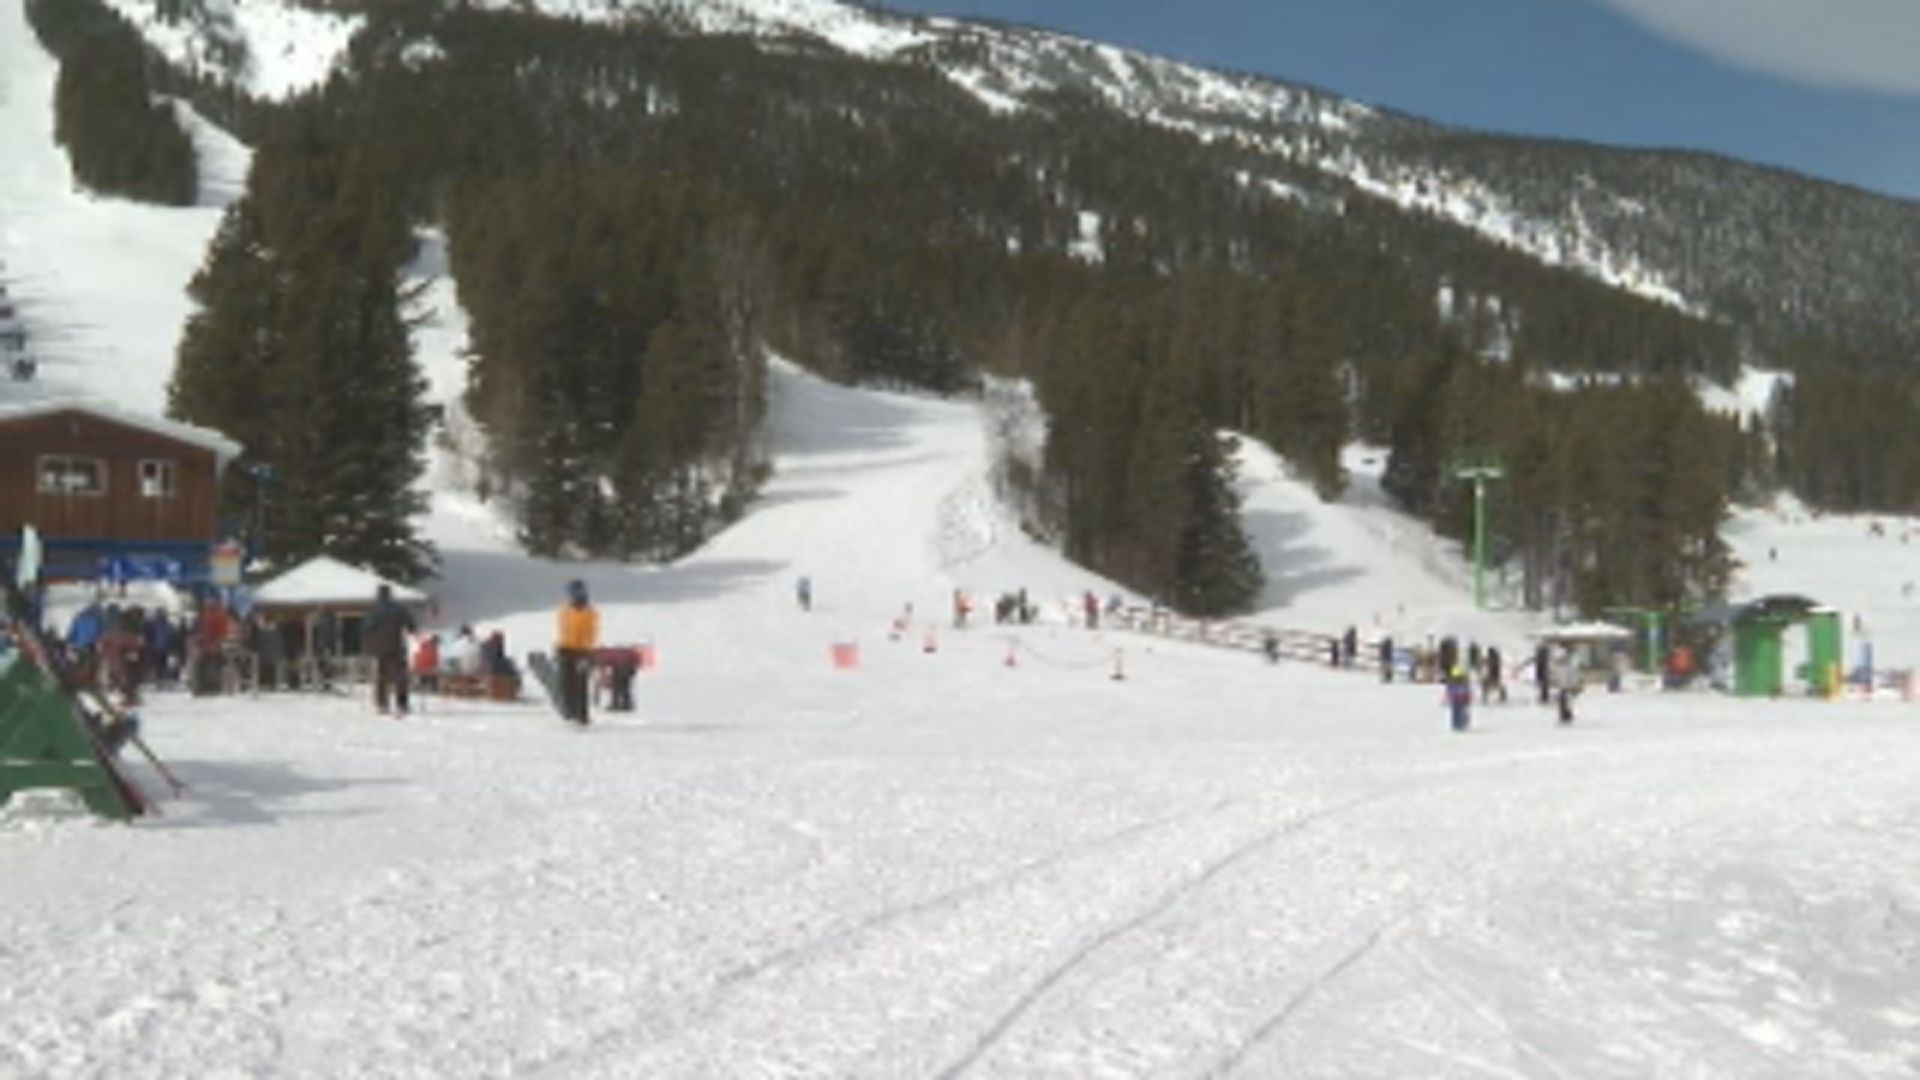 Castle Mountain rebounds after rocky start to ski season